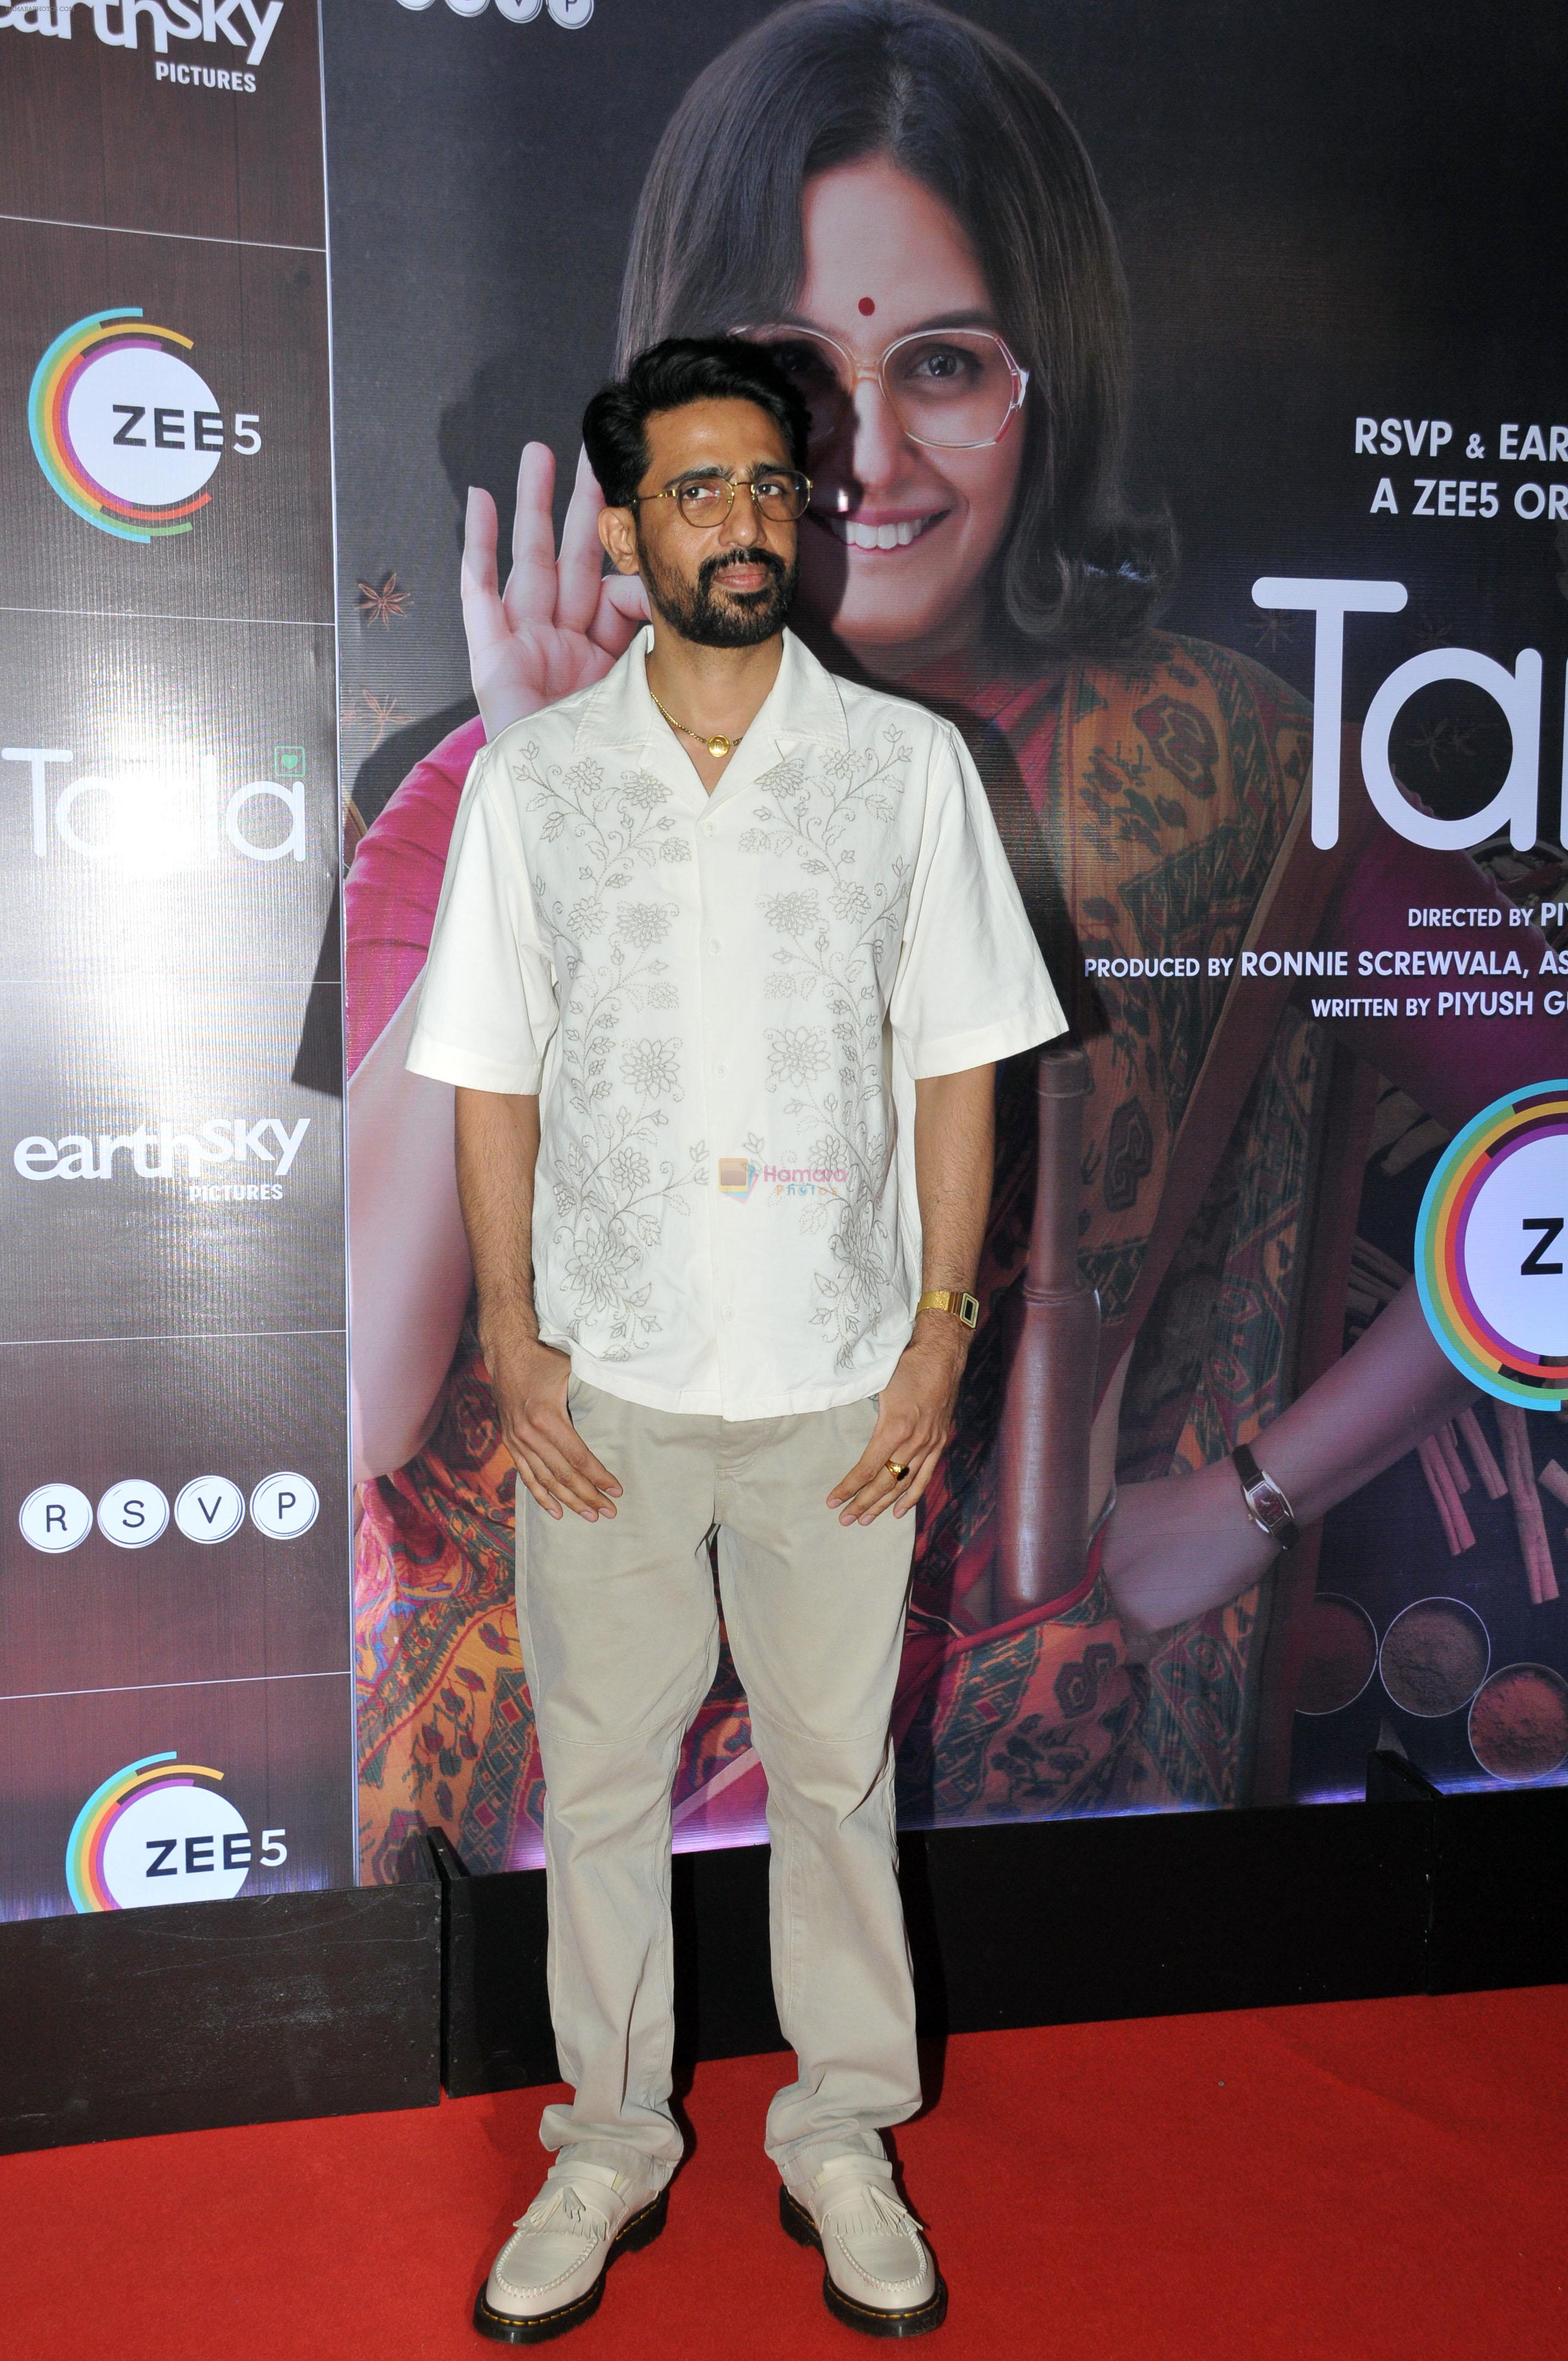 Gulshan Devaiah at the Screening of film Tarla on 6 July 2023